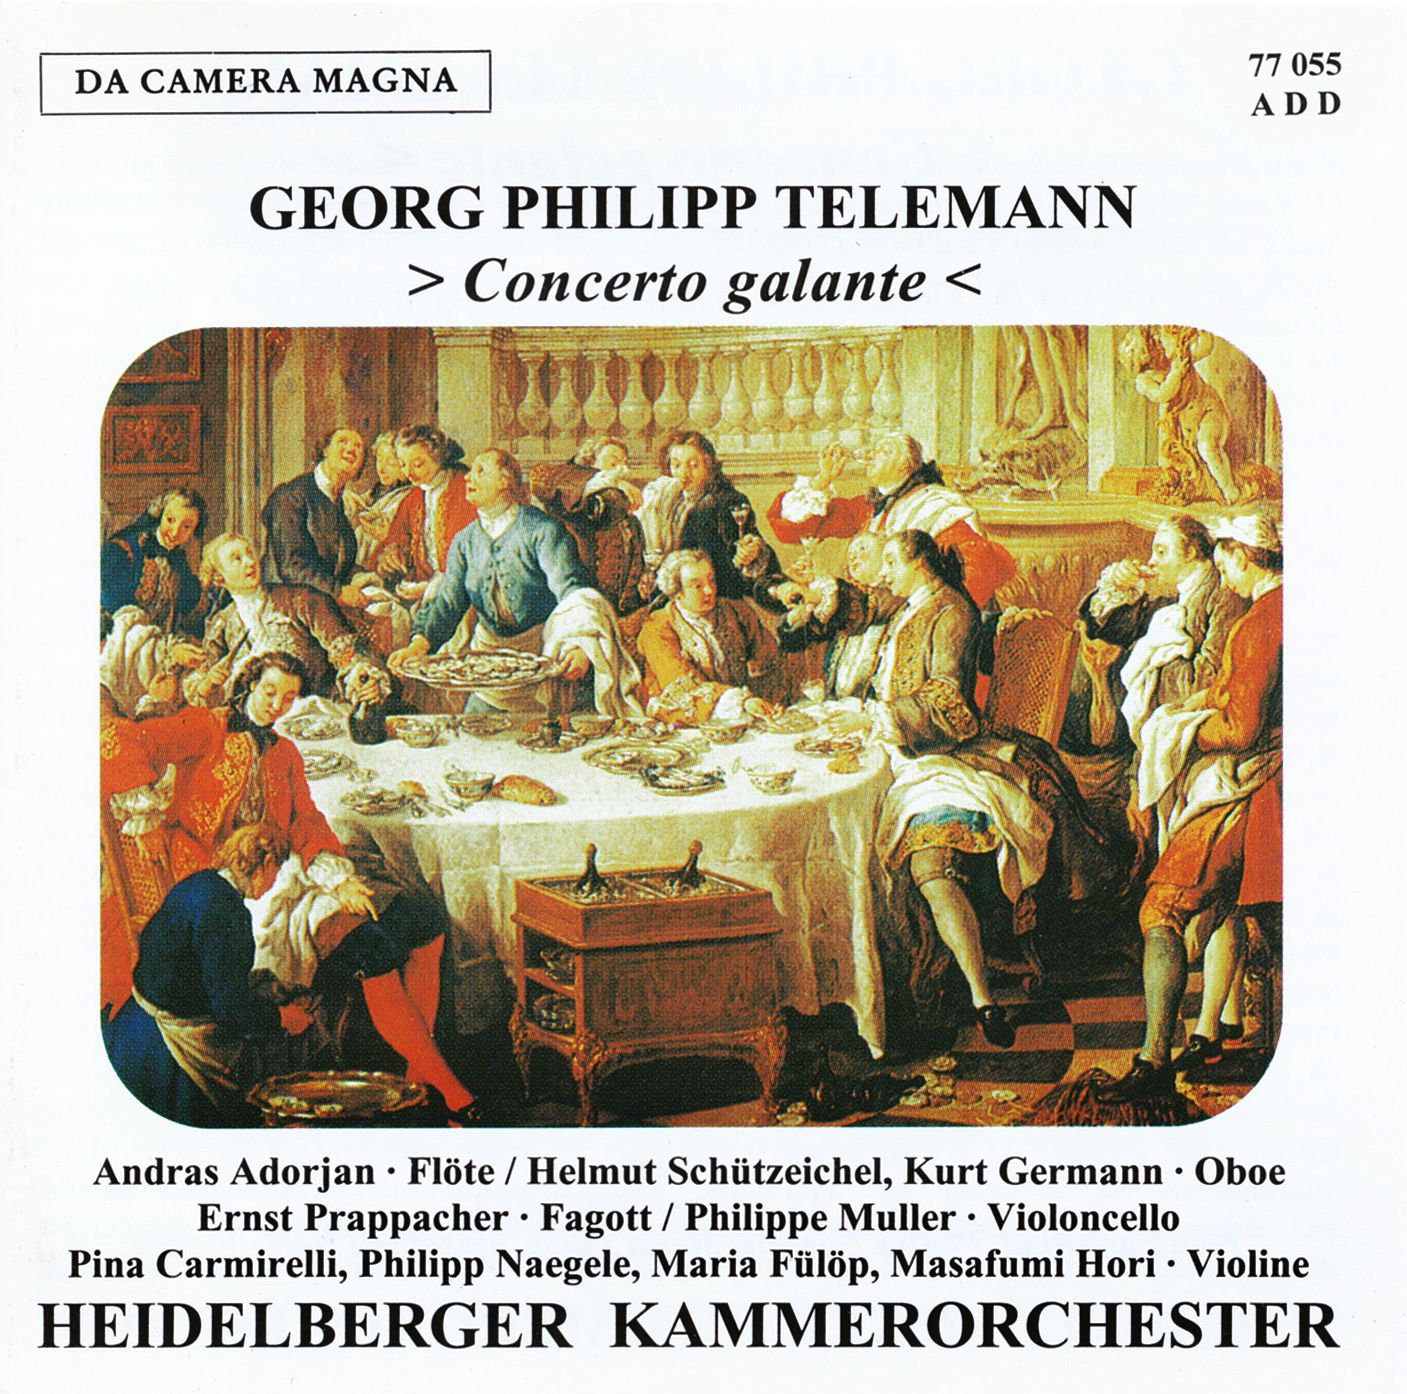 Georg Philipp Telemann - Concerto galante